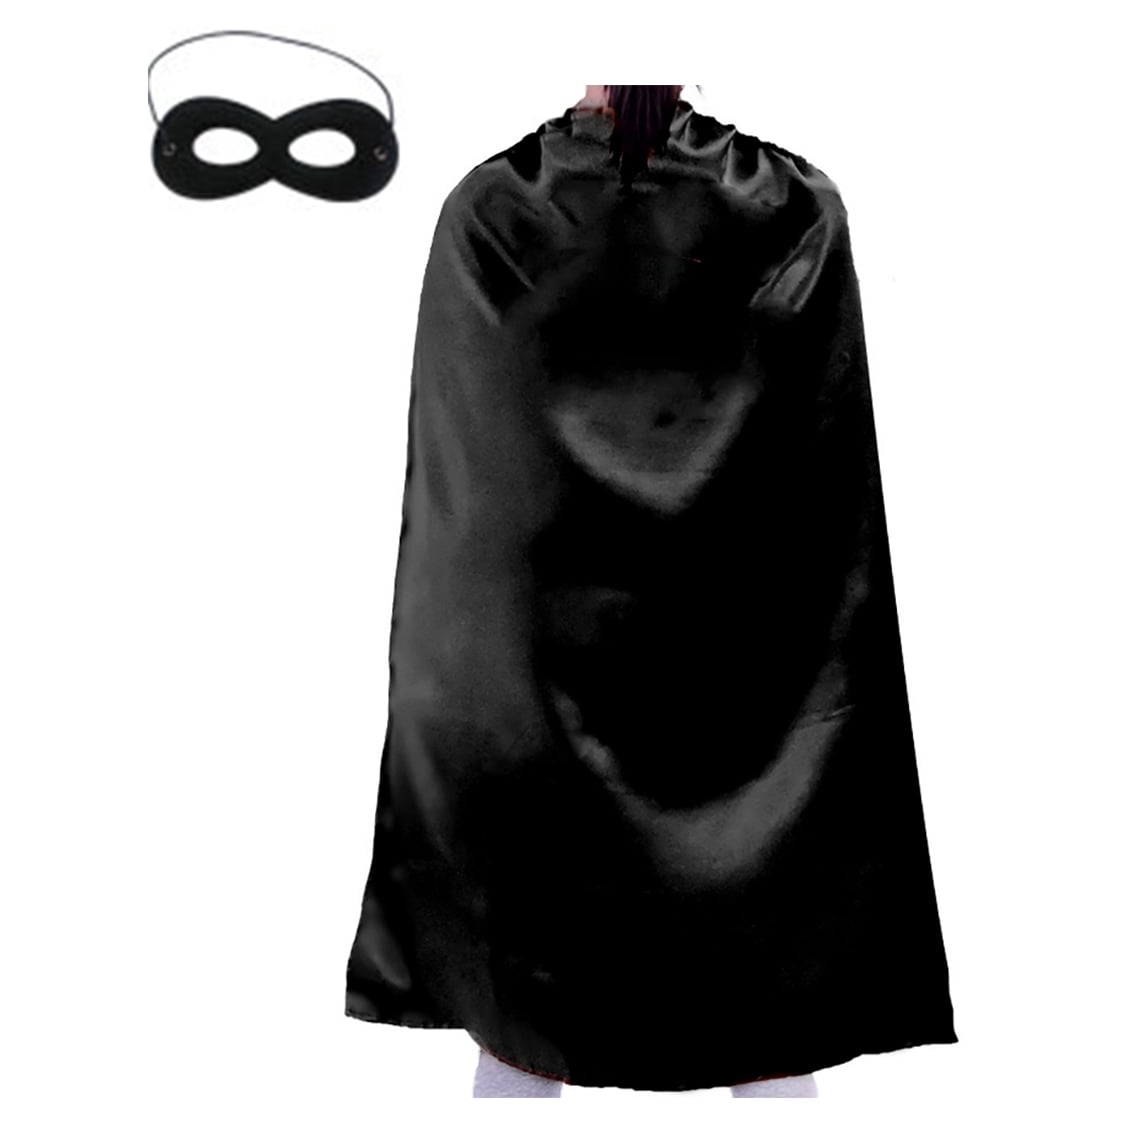 39" Adult/Teen Black Superhero Cape & Mask Costume Set ~ HALLOWEEN COSTUME PARTY